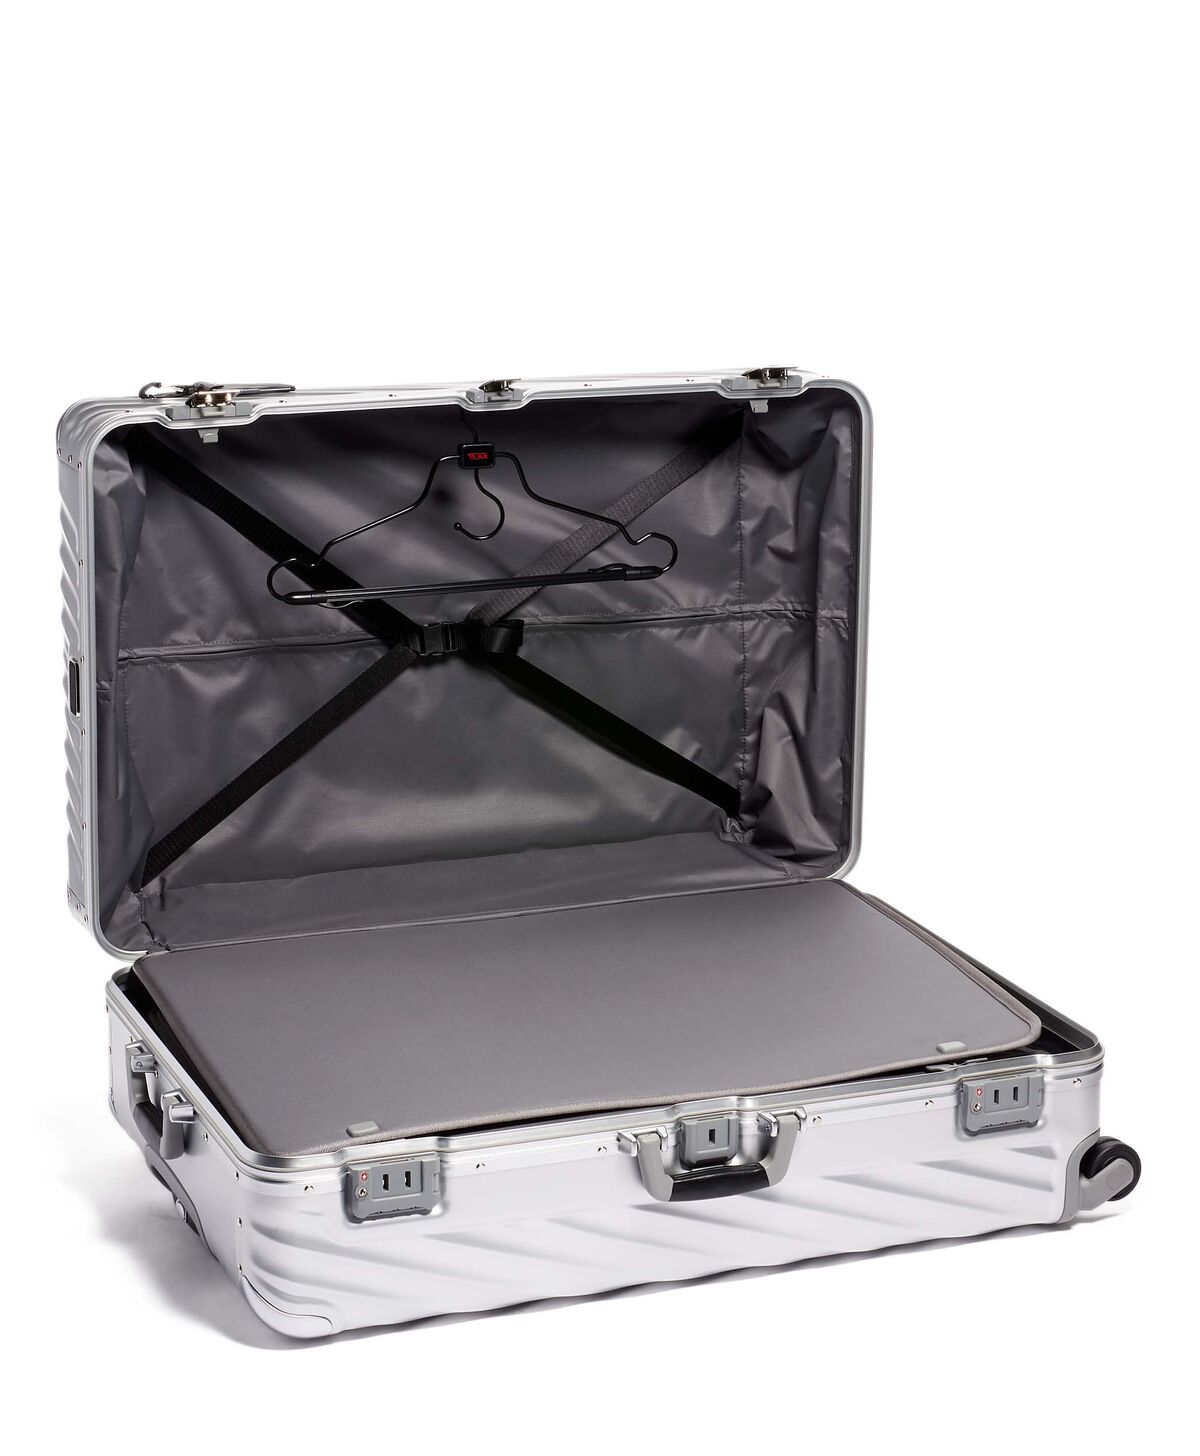 Tumi Worldwide Trip Packing Case